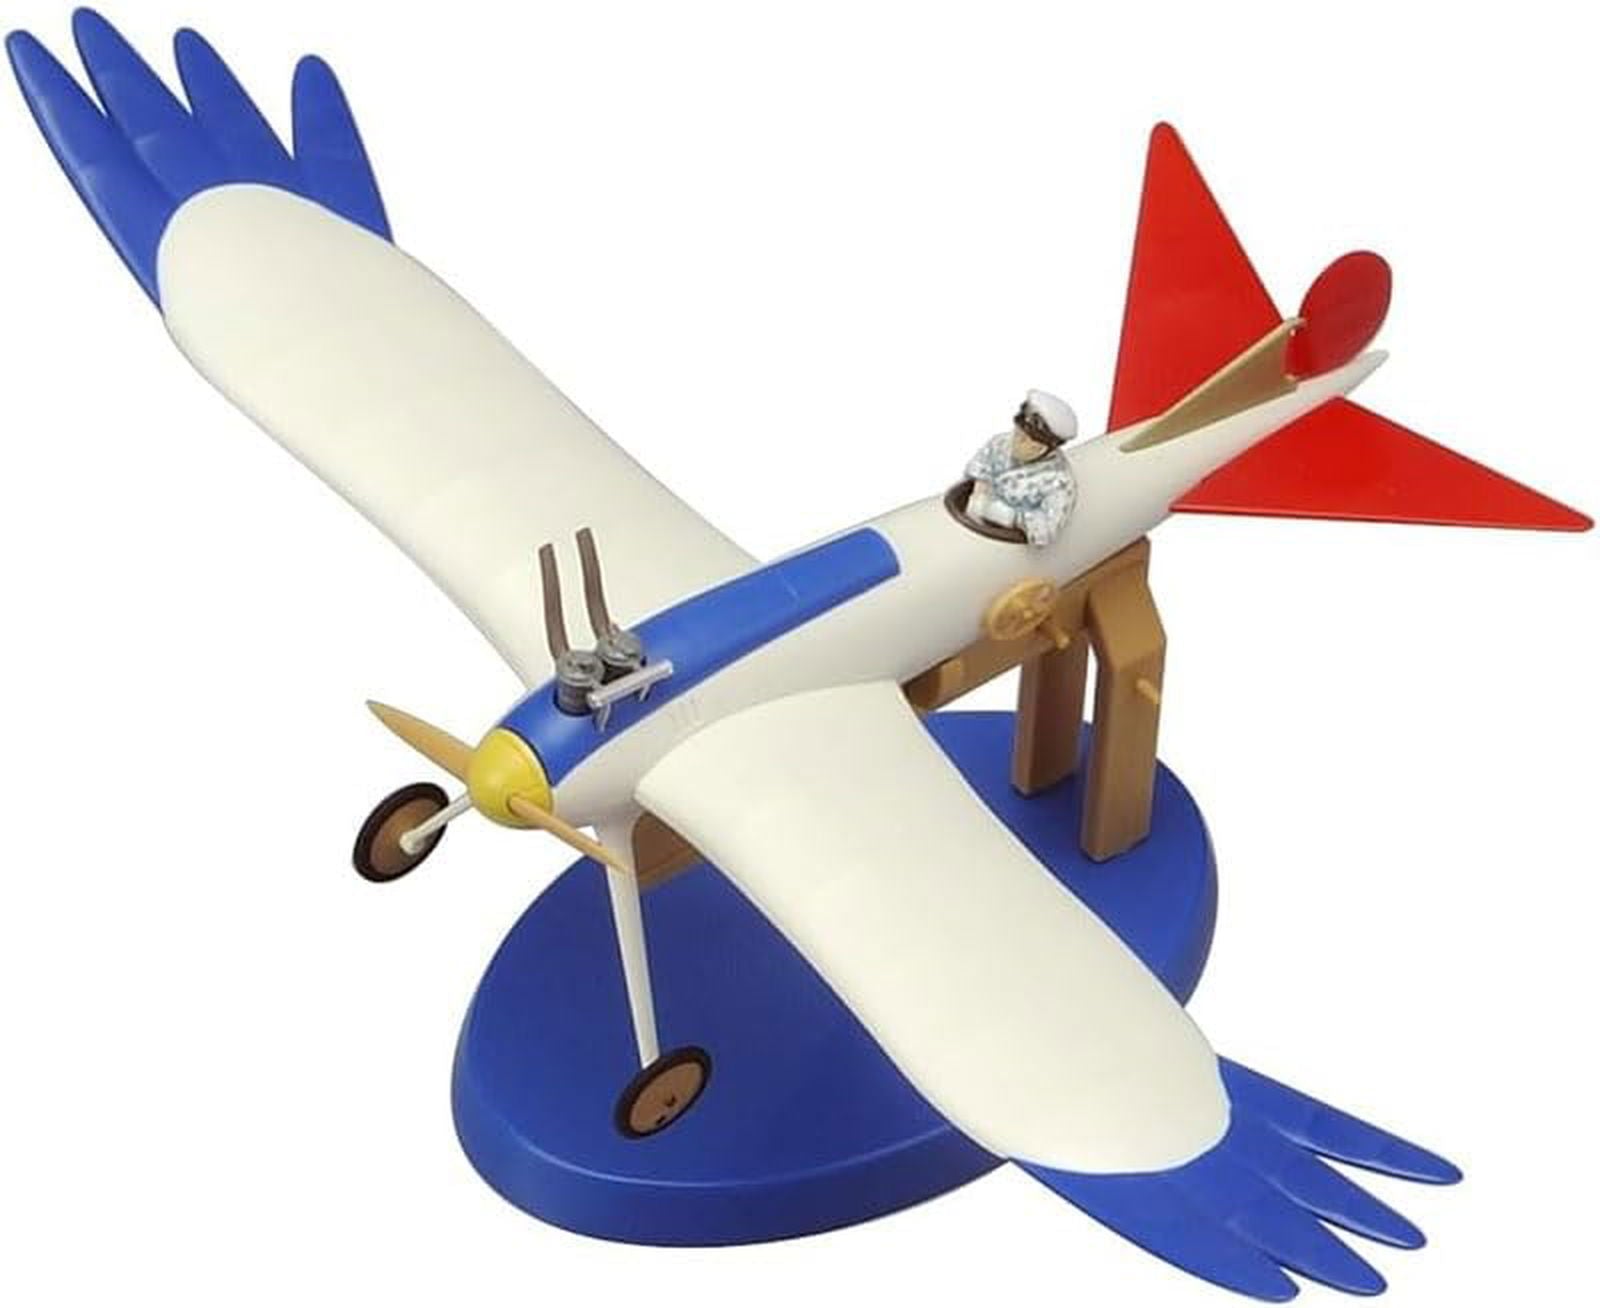 Fine Molds FG6 Studio Ghibli Series 1/48 Wind Control Jiro's Bird Airplane Plastic Model - BanzaiHobby